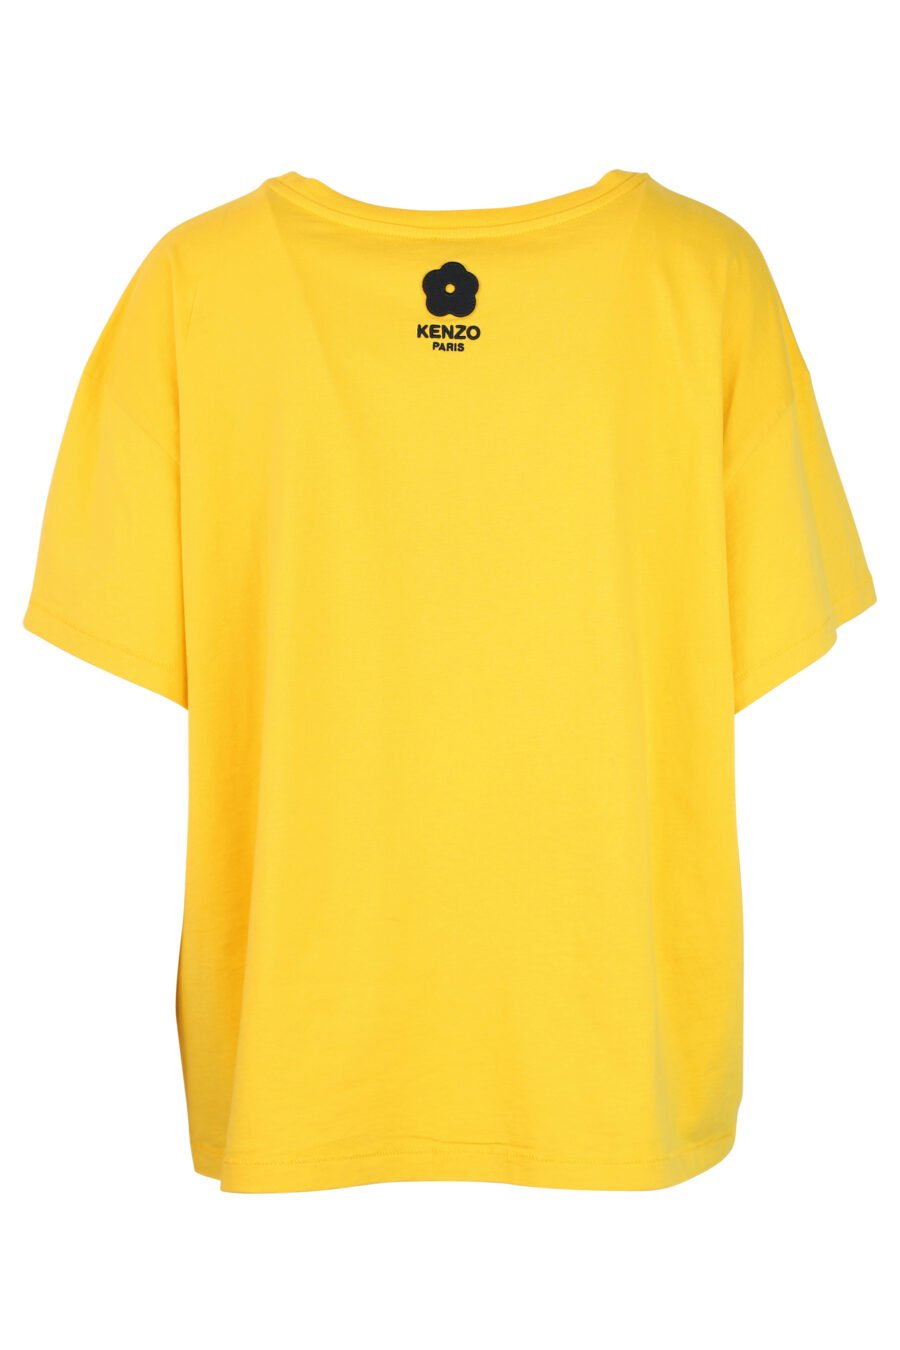 Camiseta amarilla con maxilogo elefante - 3612230460065 2